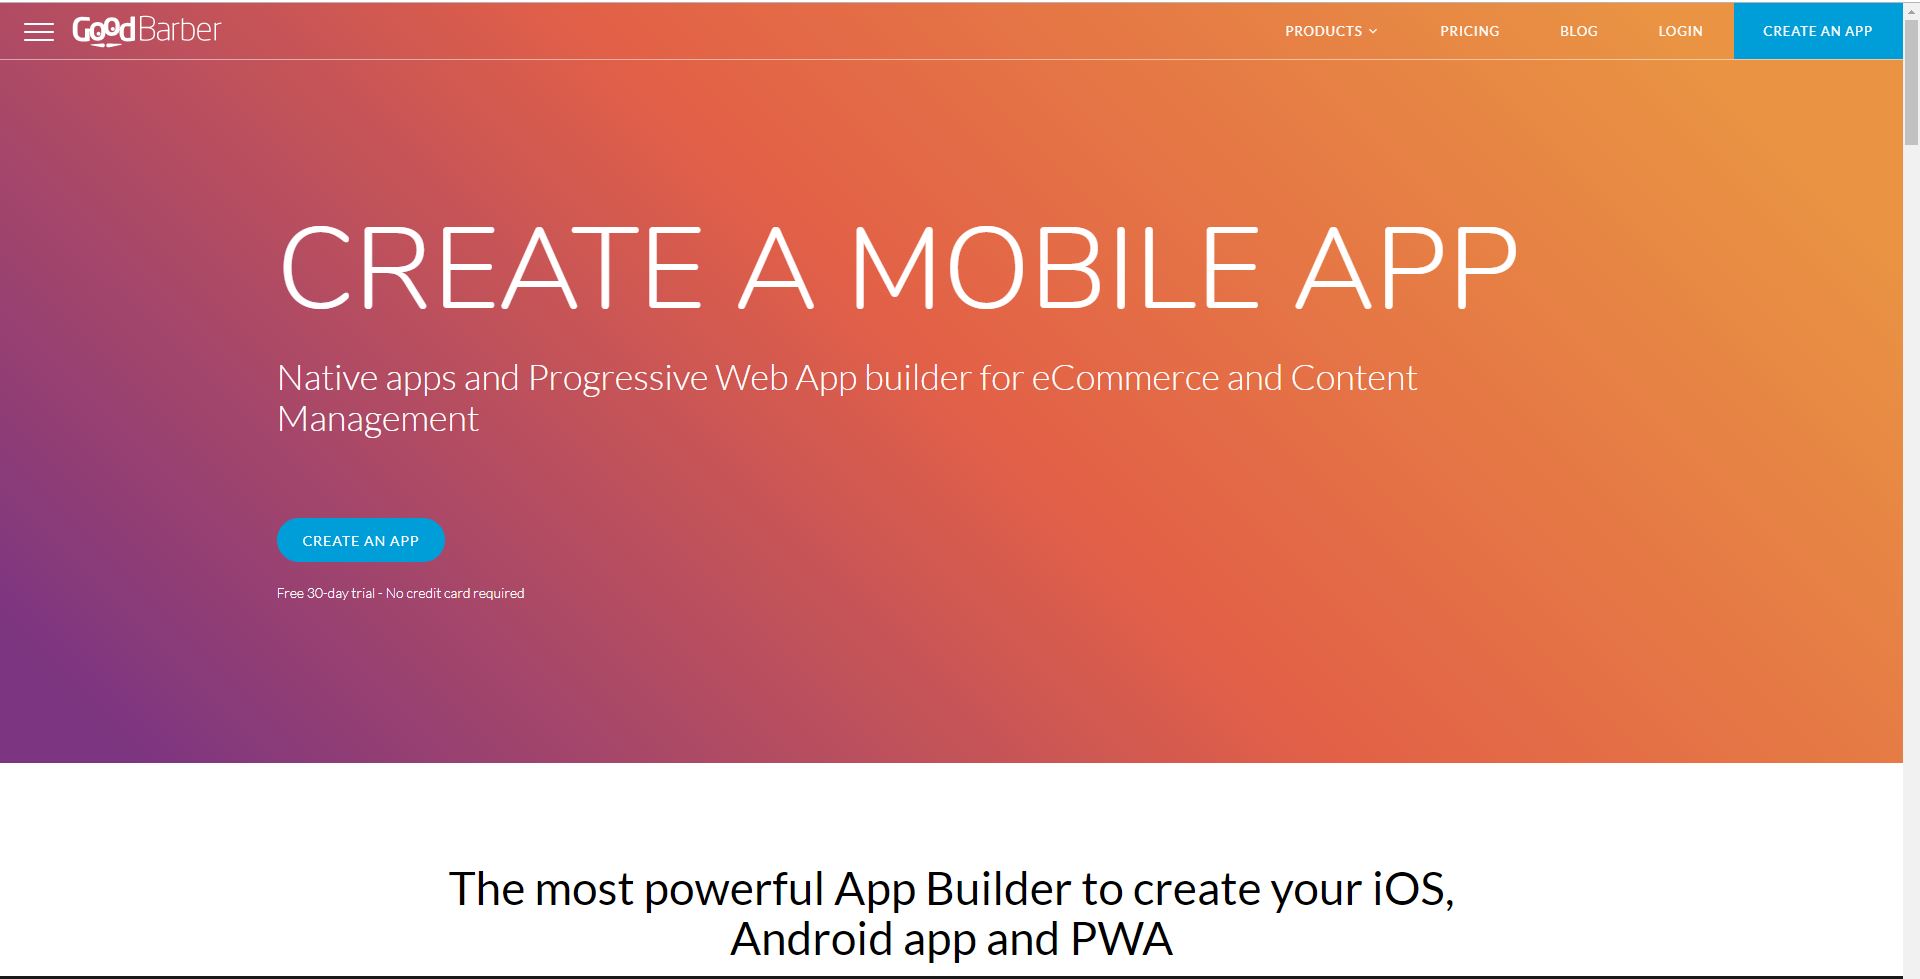 Mobile App development platforms